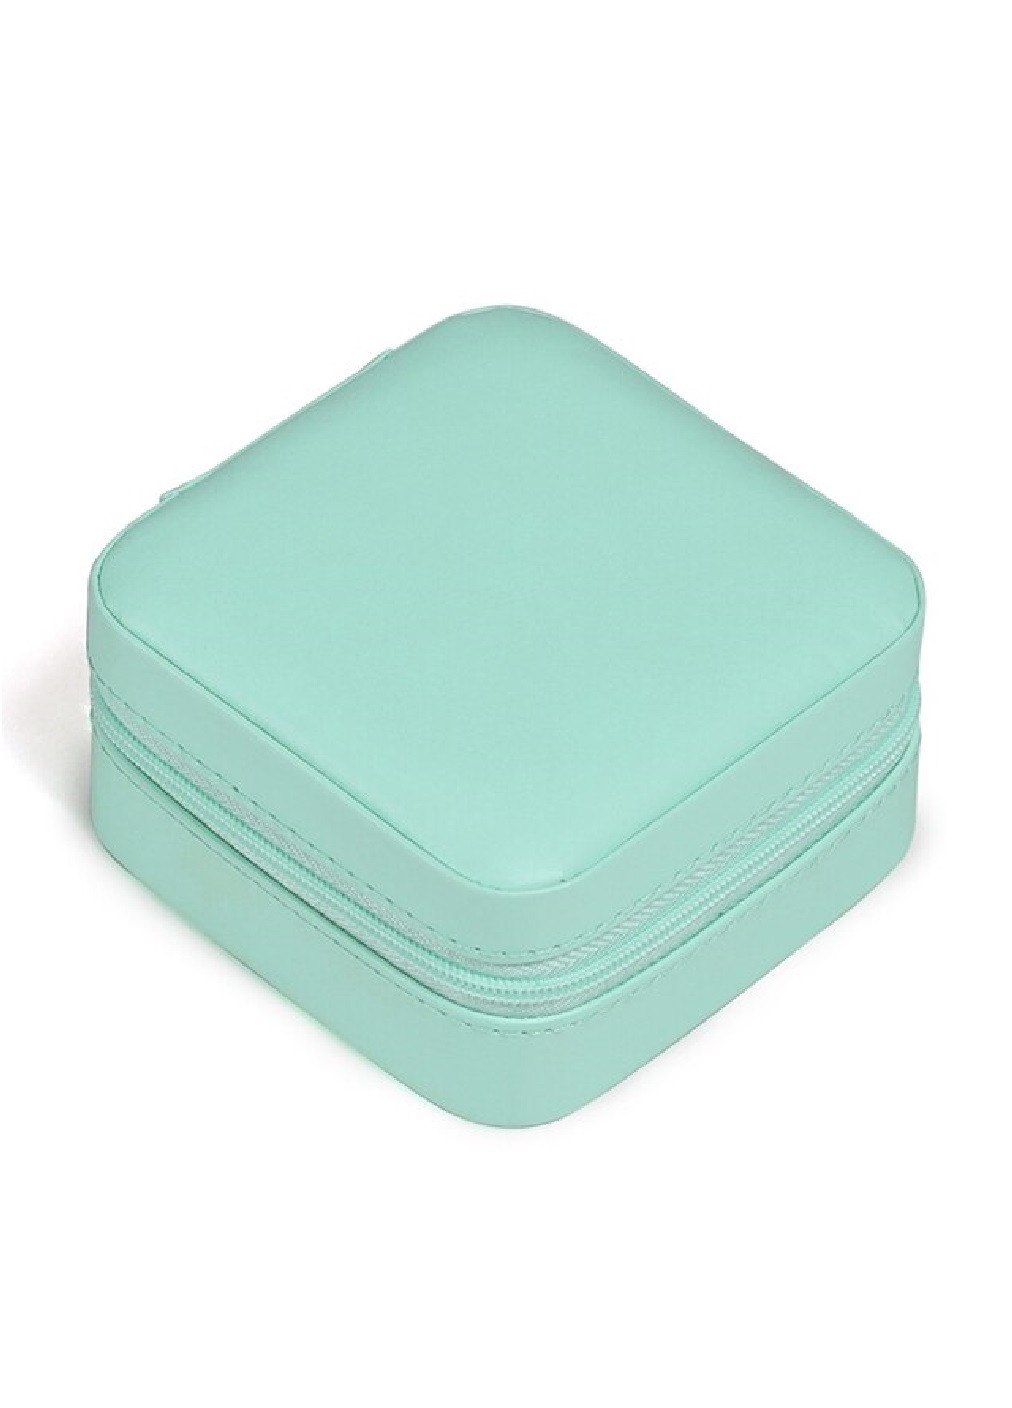 Шкатулка сундук органайзер коробка футляр для хранения украшений бижутерии эко кожа 10х10х5 см (474621-Prob) Бирюзовая Unbranded (259131582)